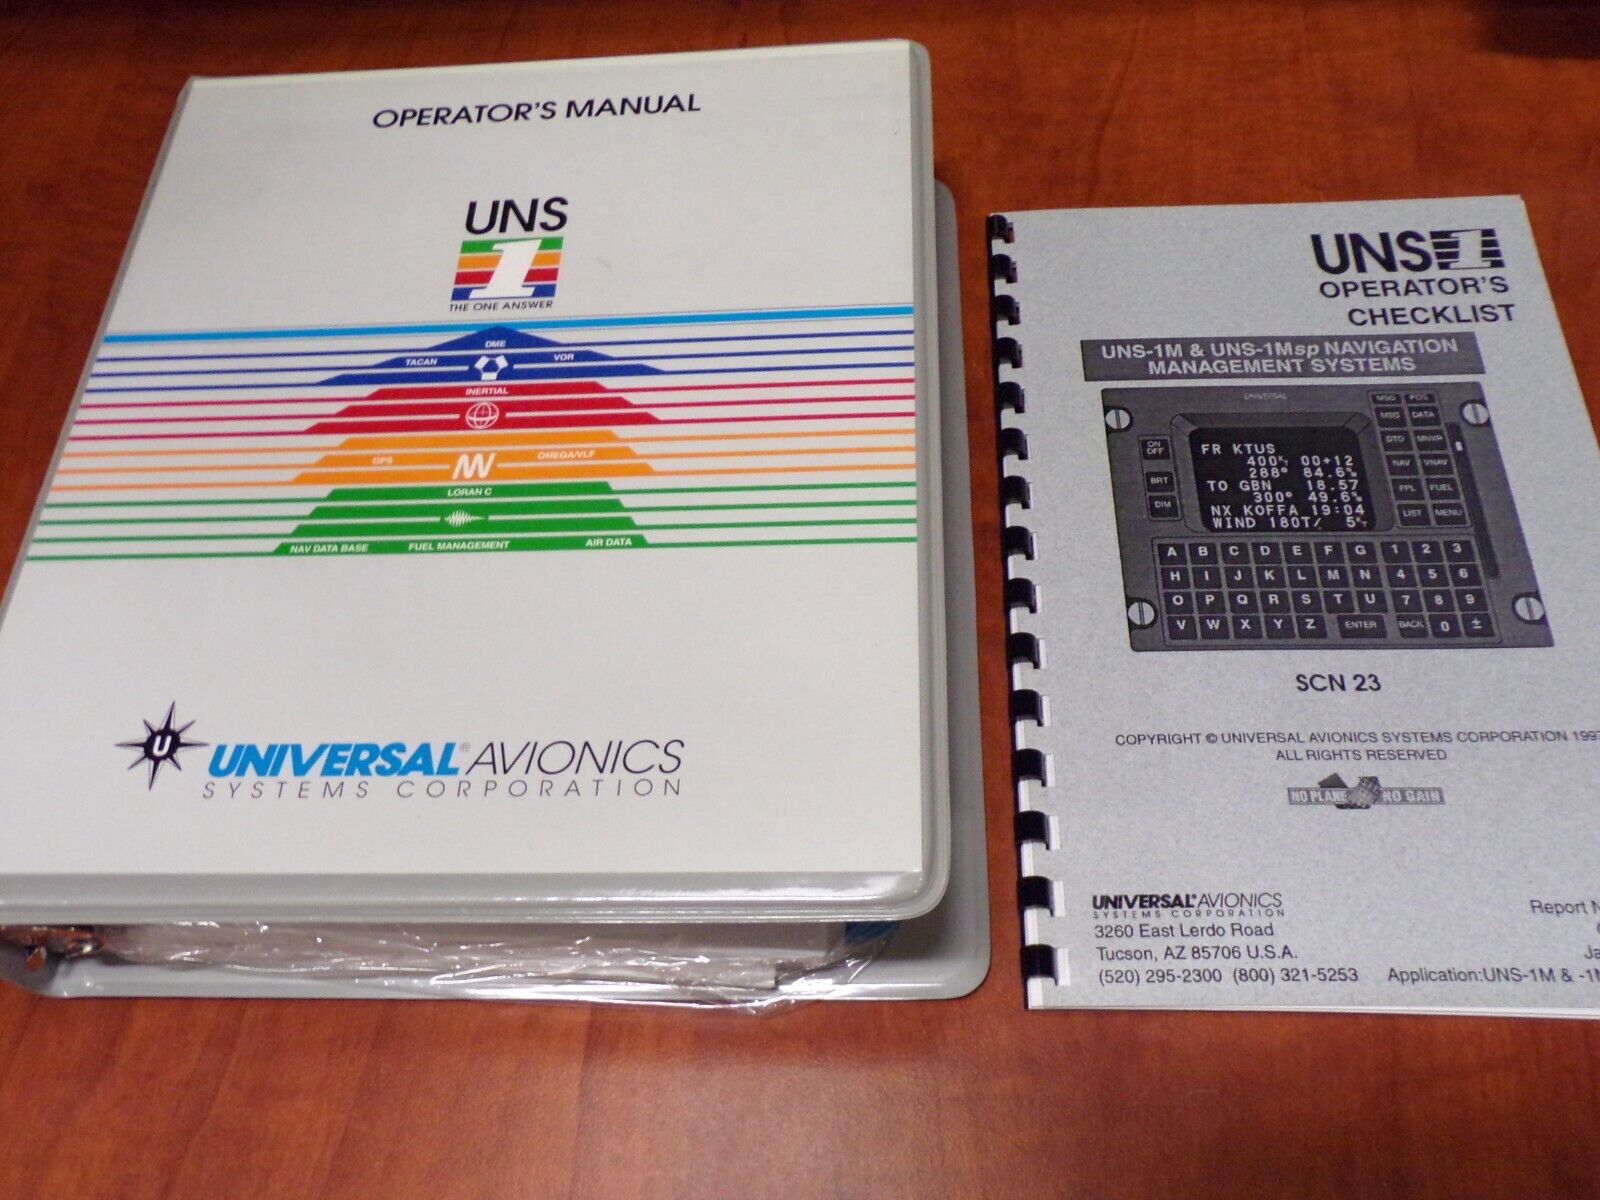 Universal Avionics UNS-1 Operator Manual and Operator's Checklist